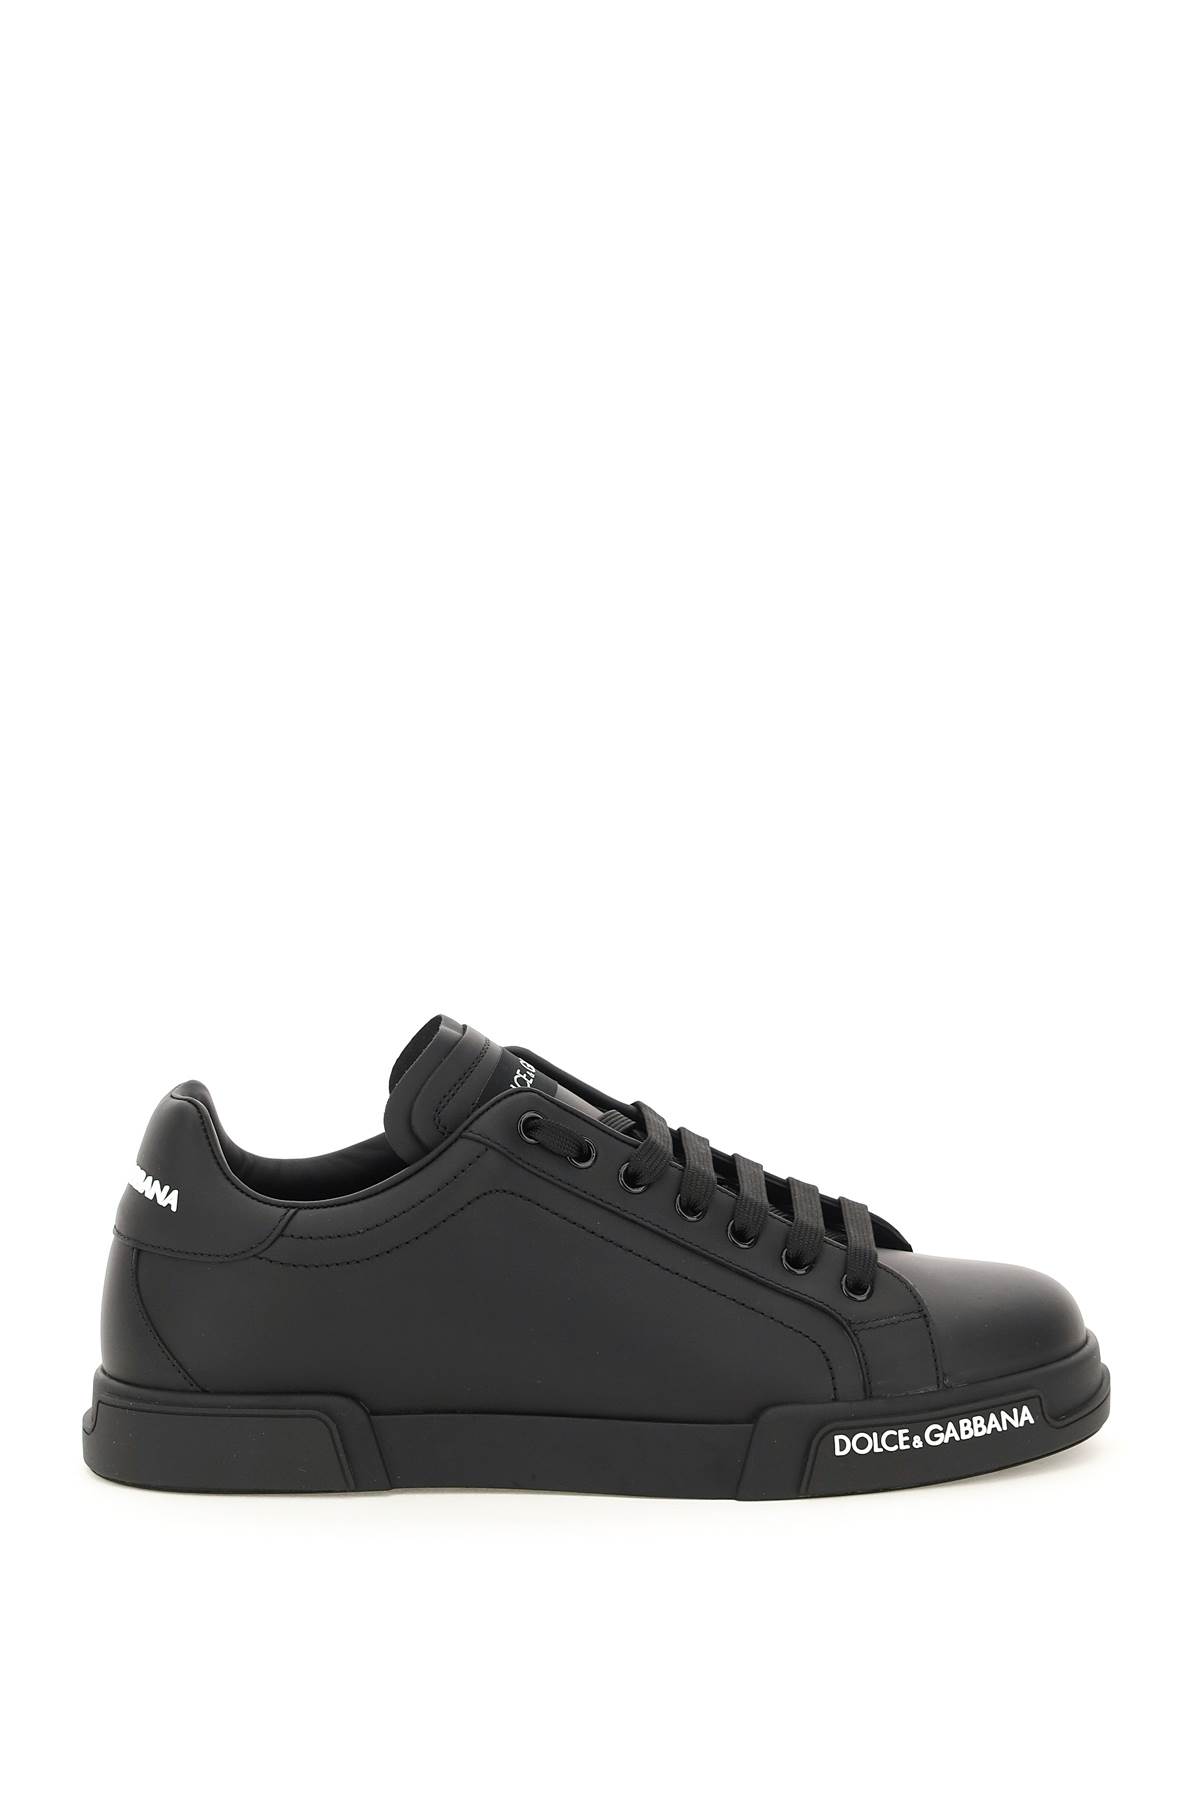 Dolce & Gabbana Portofino Light Leather Sneakers